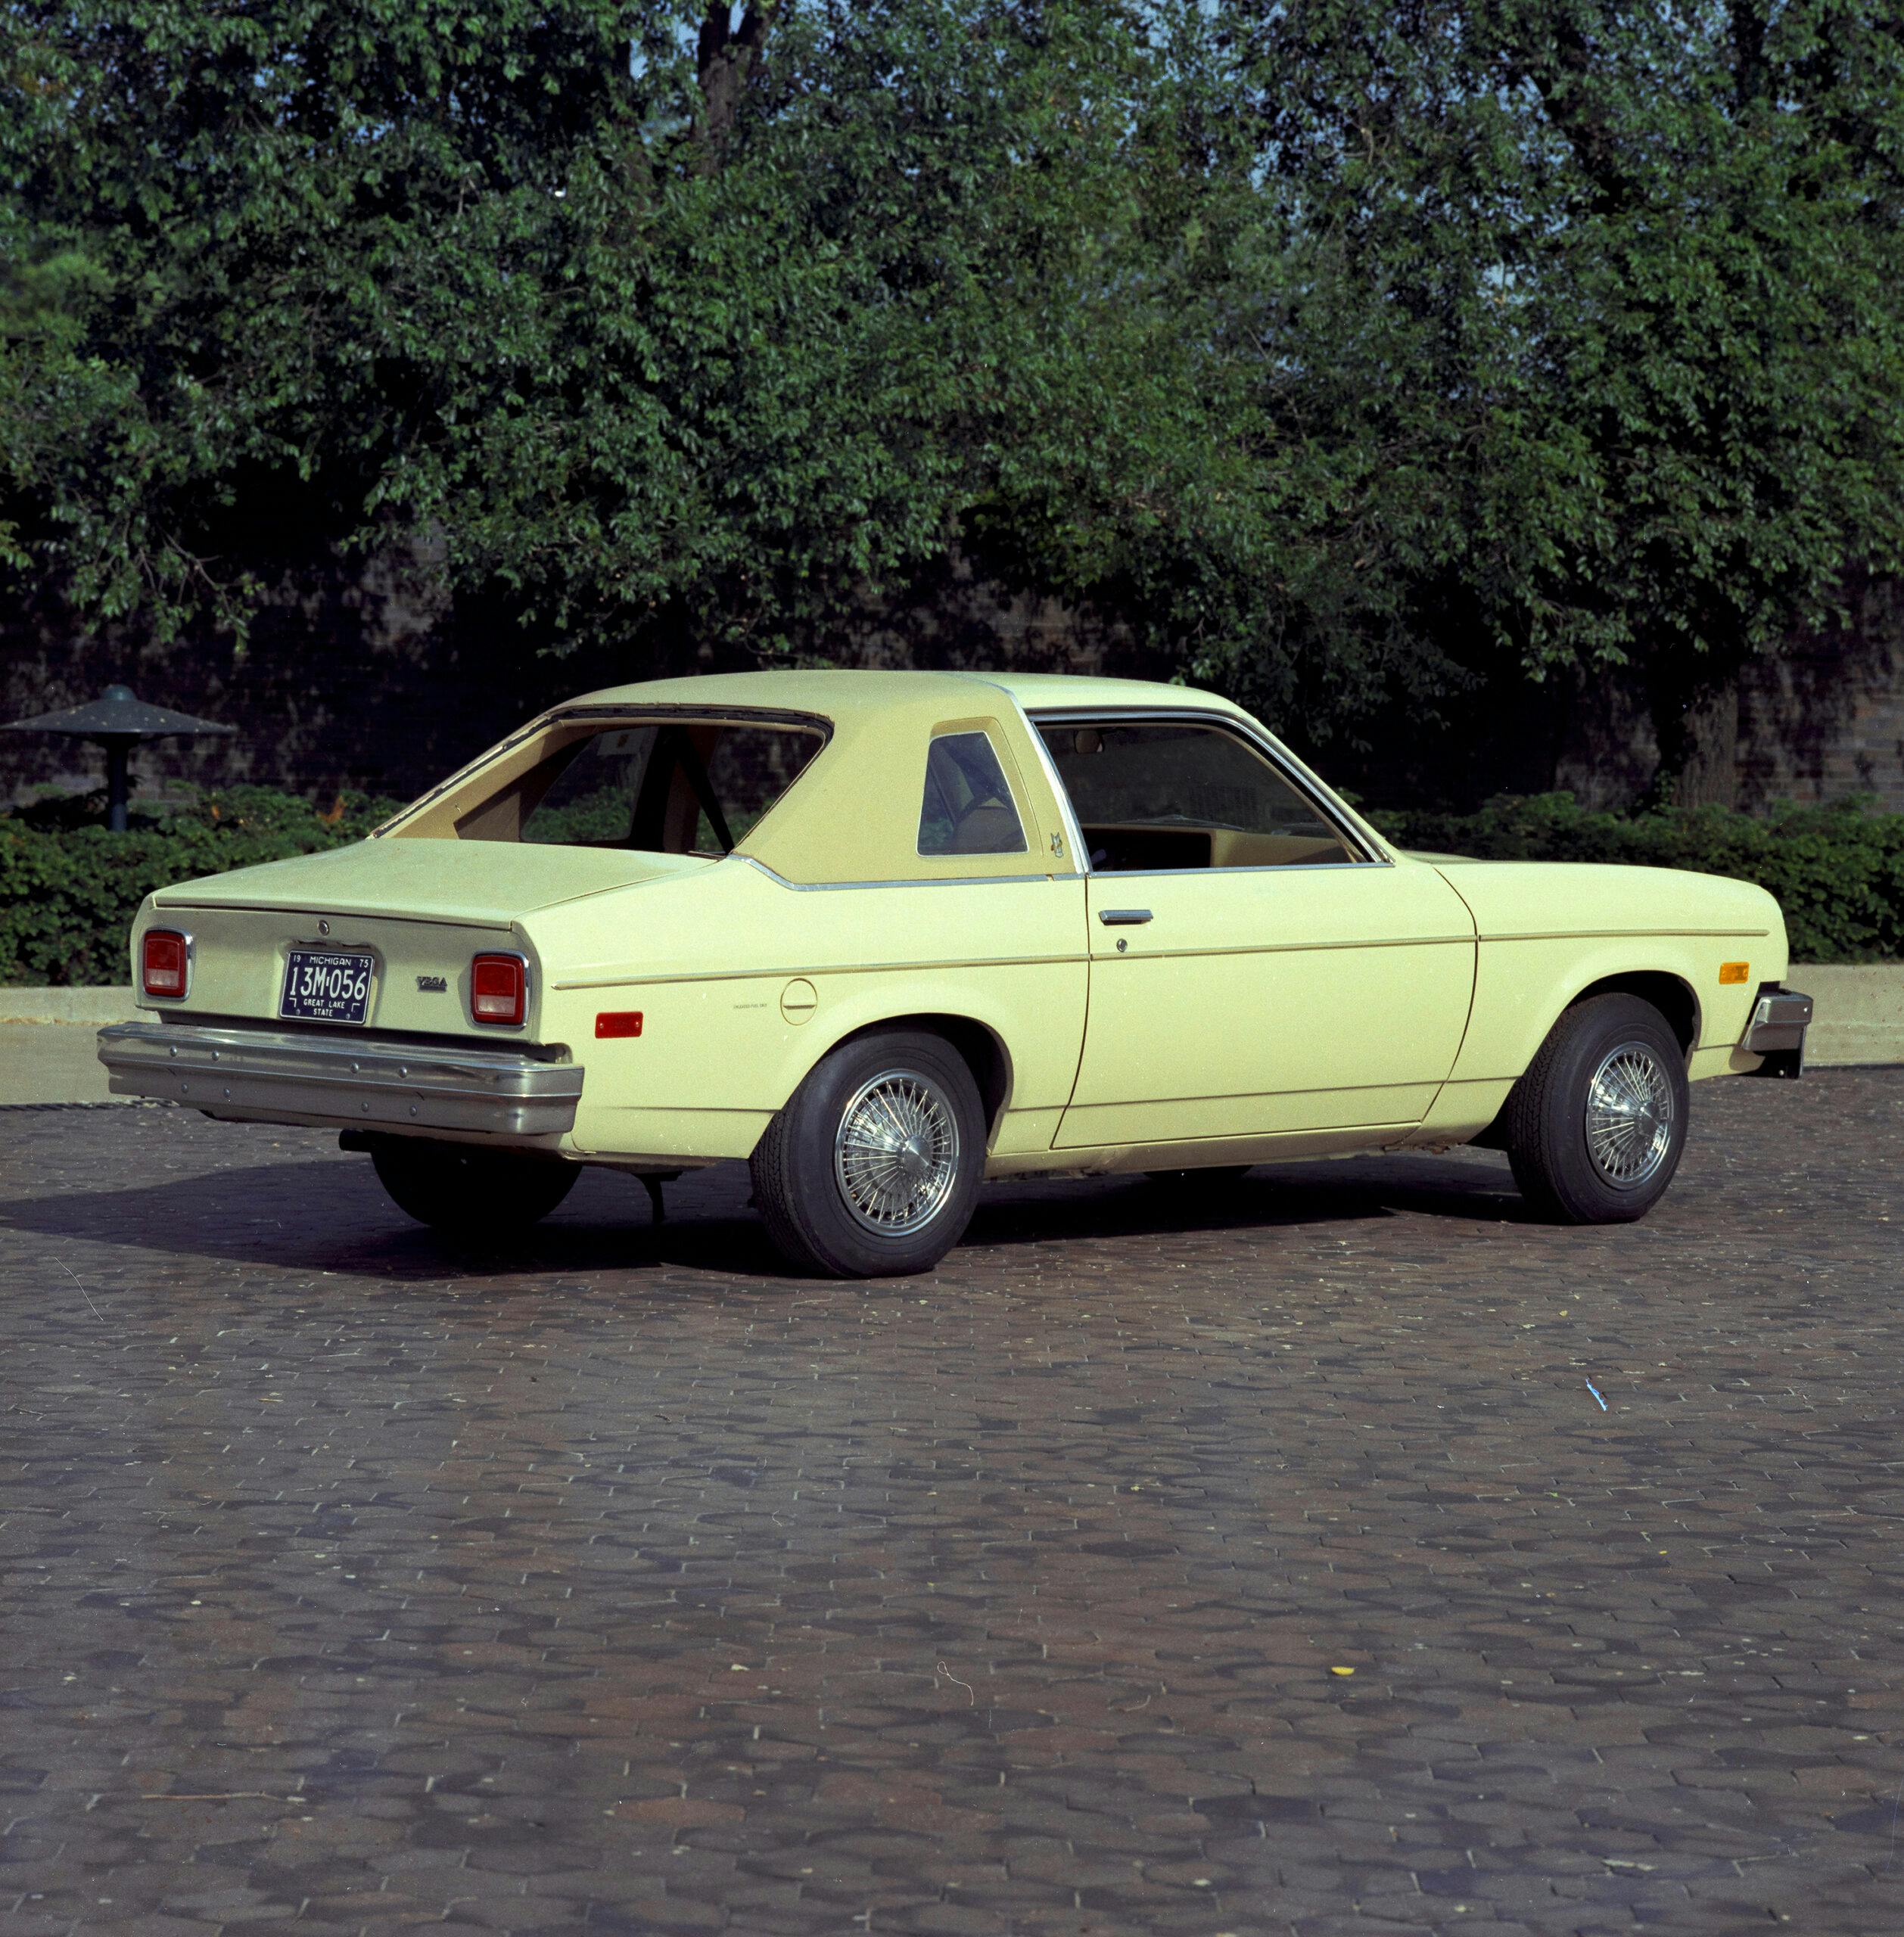 1976 Chevrolet Vega notchback cabriolet